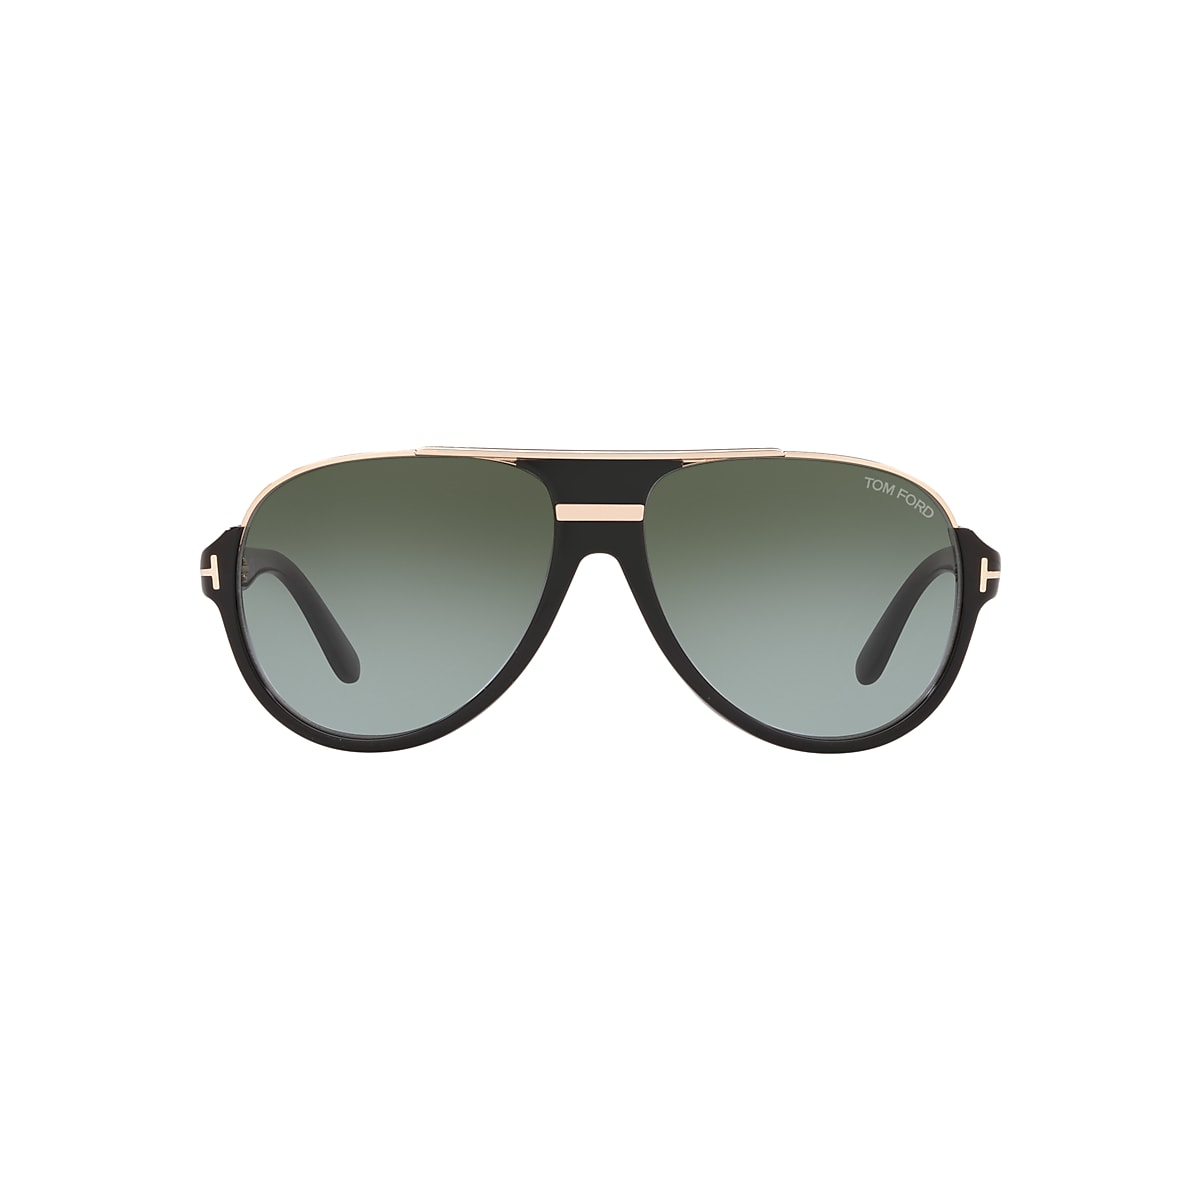 Tom Ford DIMITRY 59 Green Gradient & Black Sunglasses | Hut USA